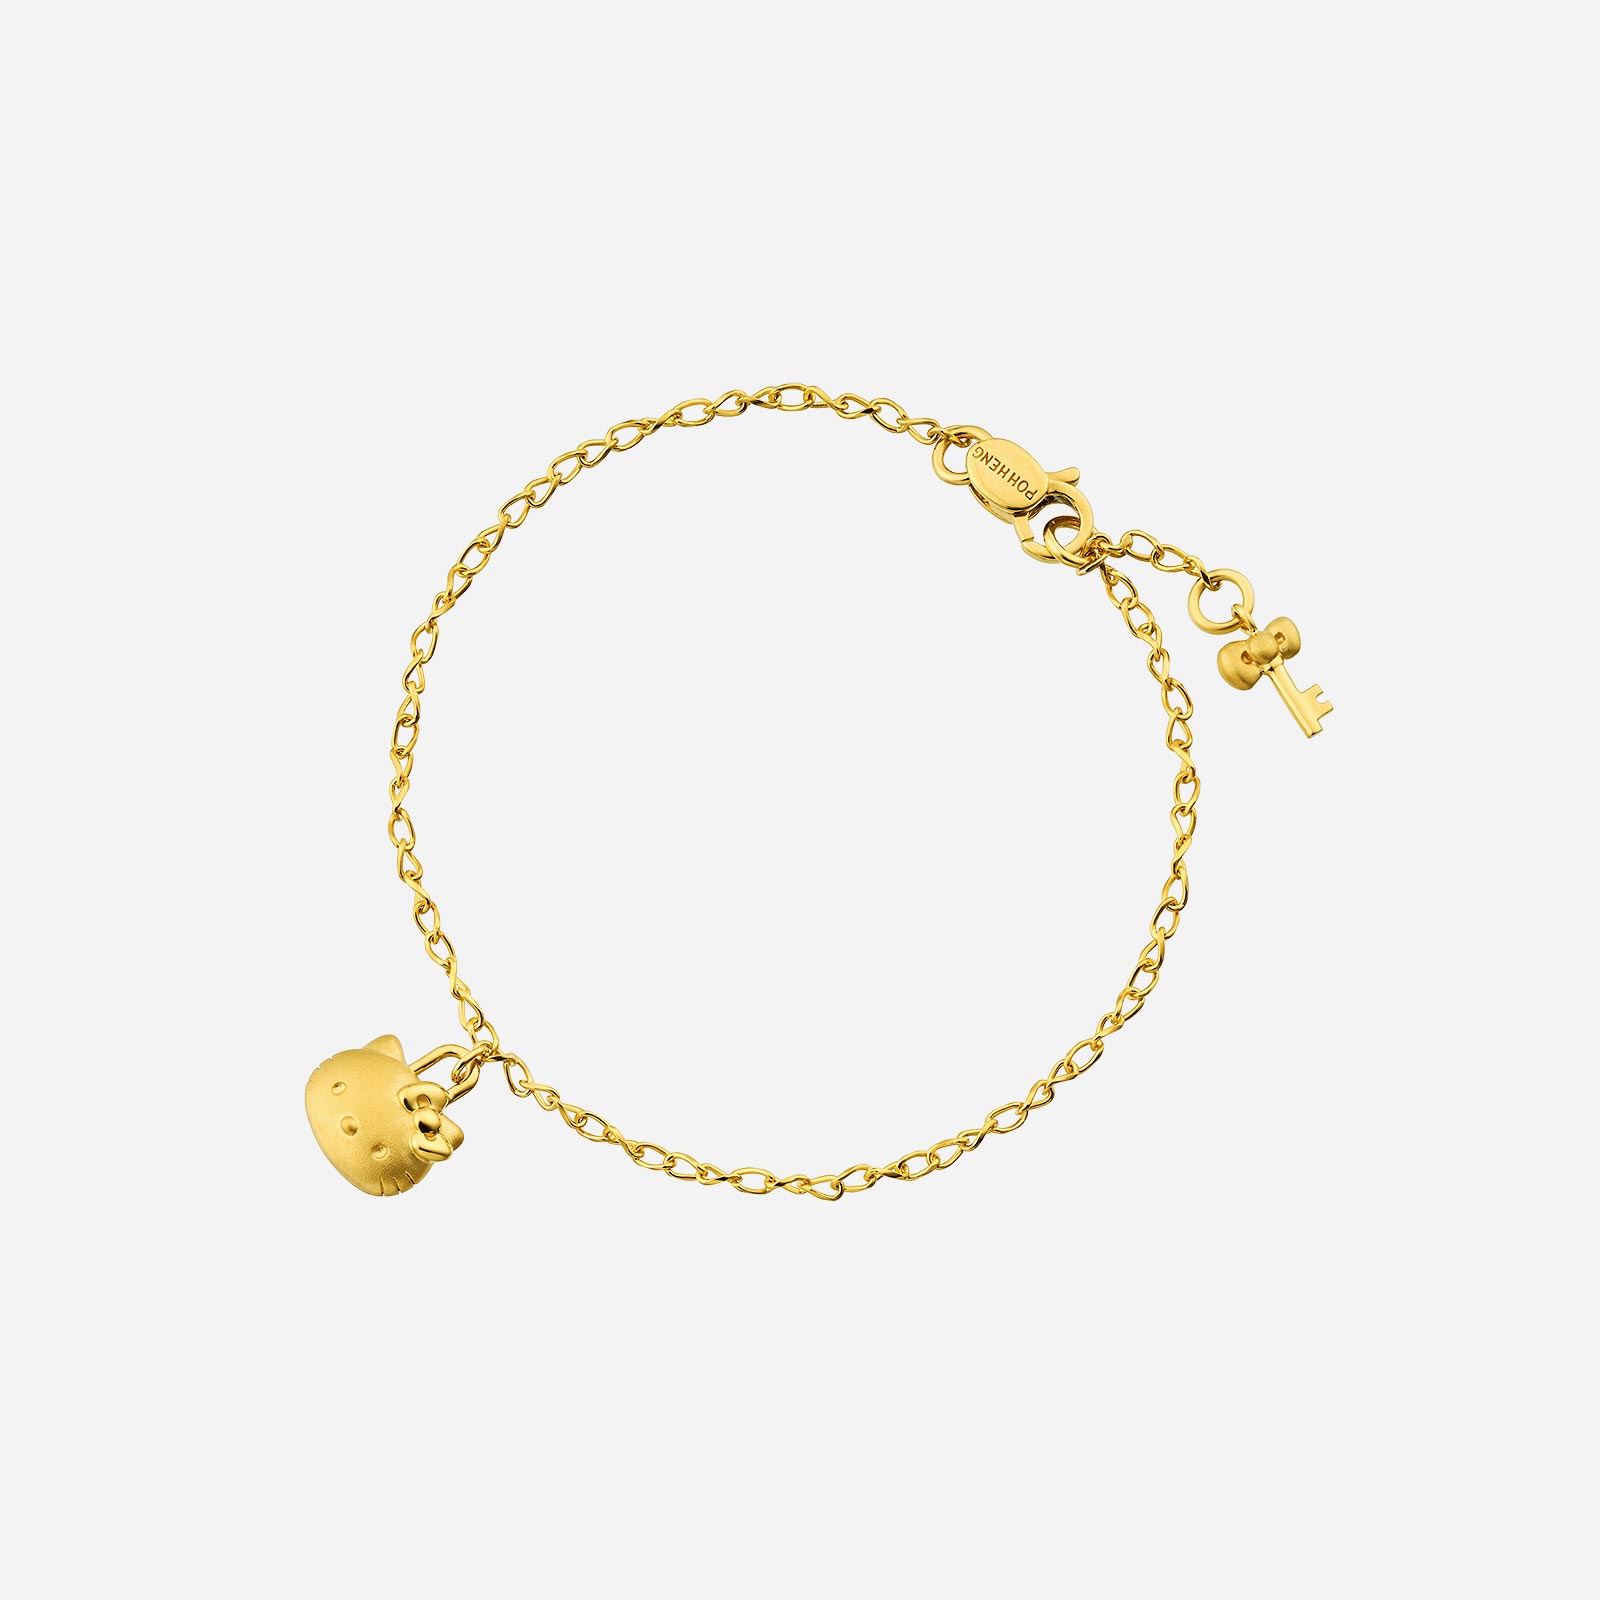 Poh Heng Hello Kitty Key To My Heart Bracelet in 22K Yellow Gold